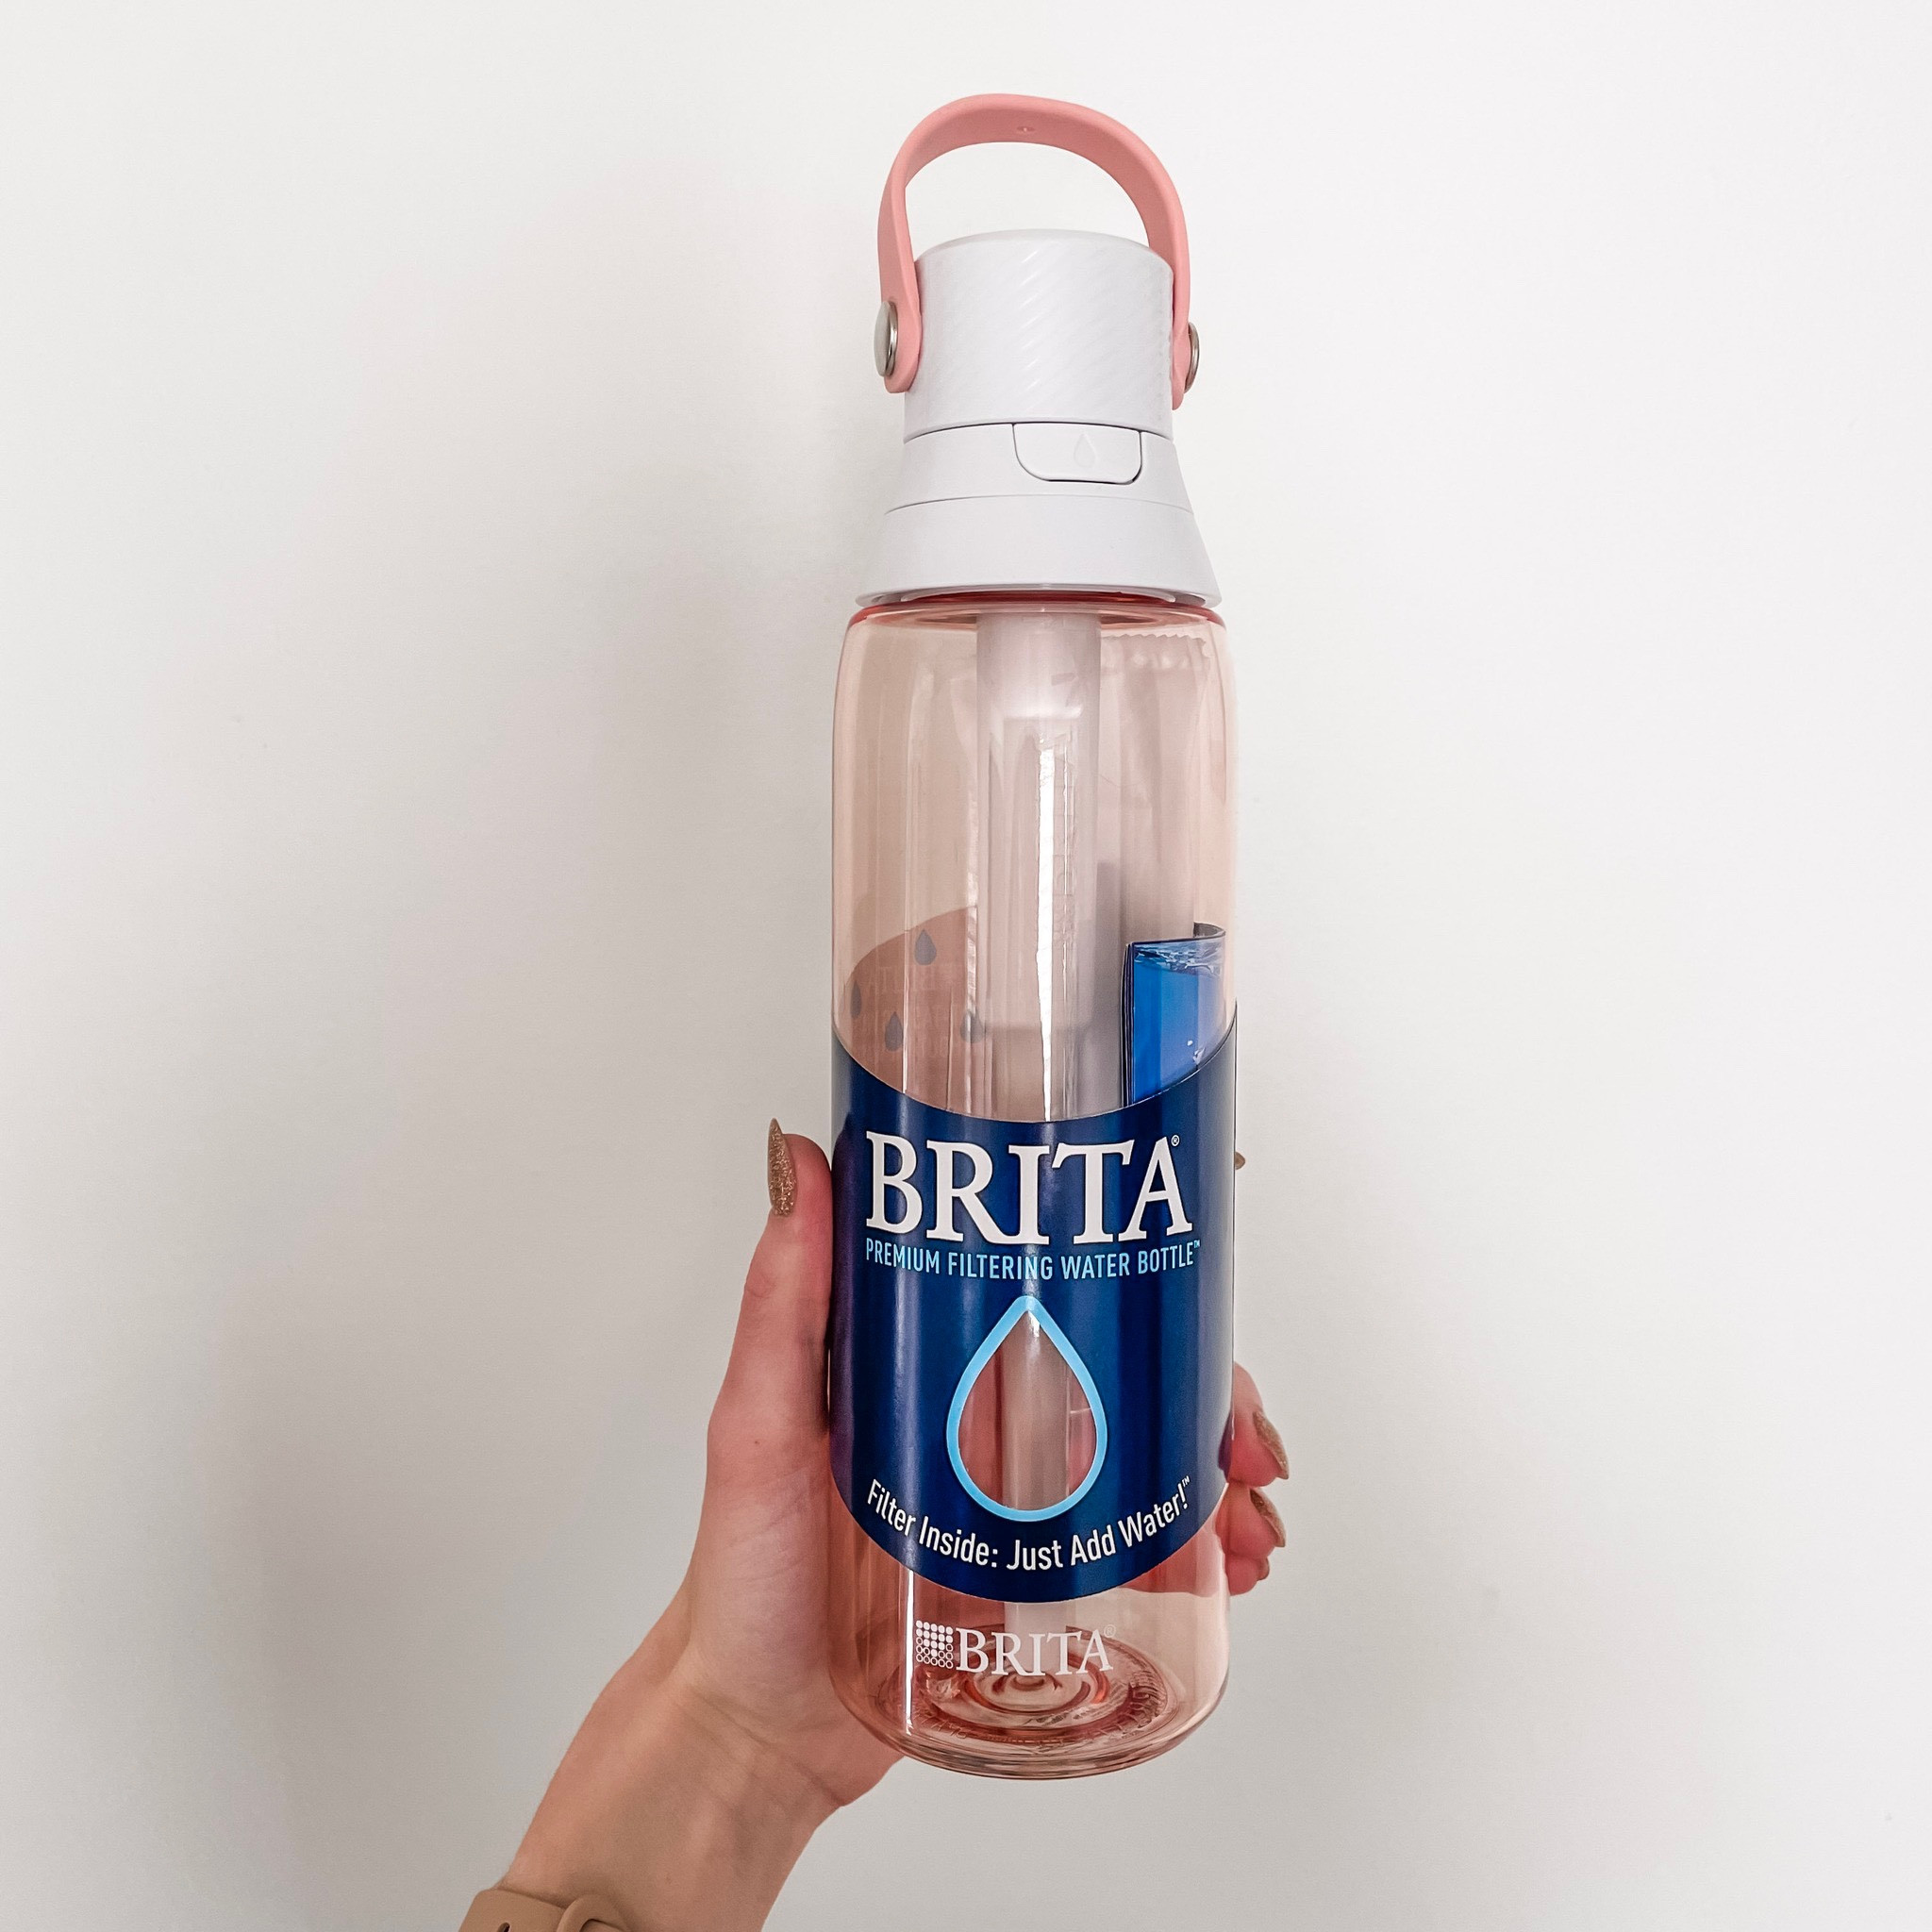 Getting Started: Brita's Premium Filtering Bottle 